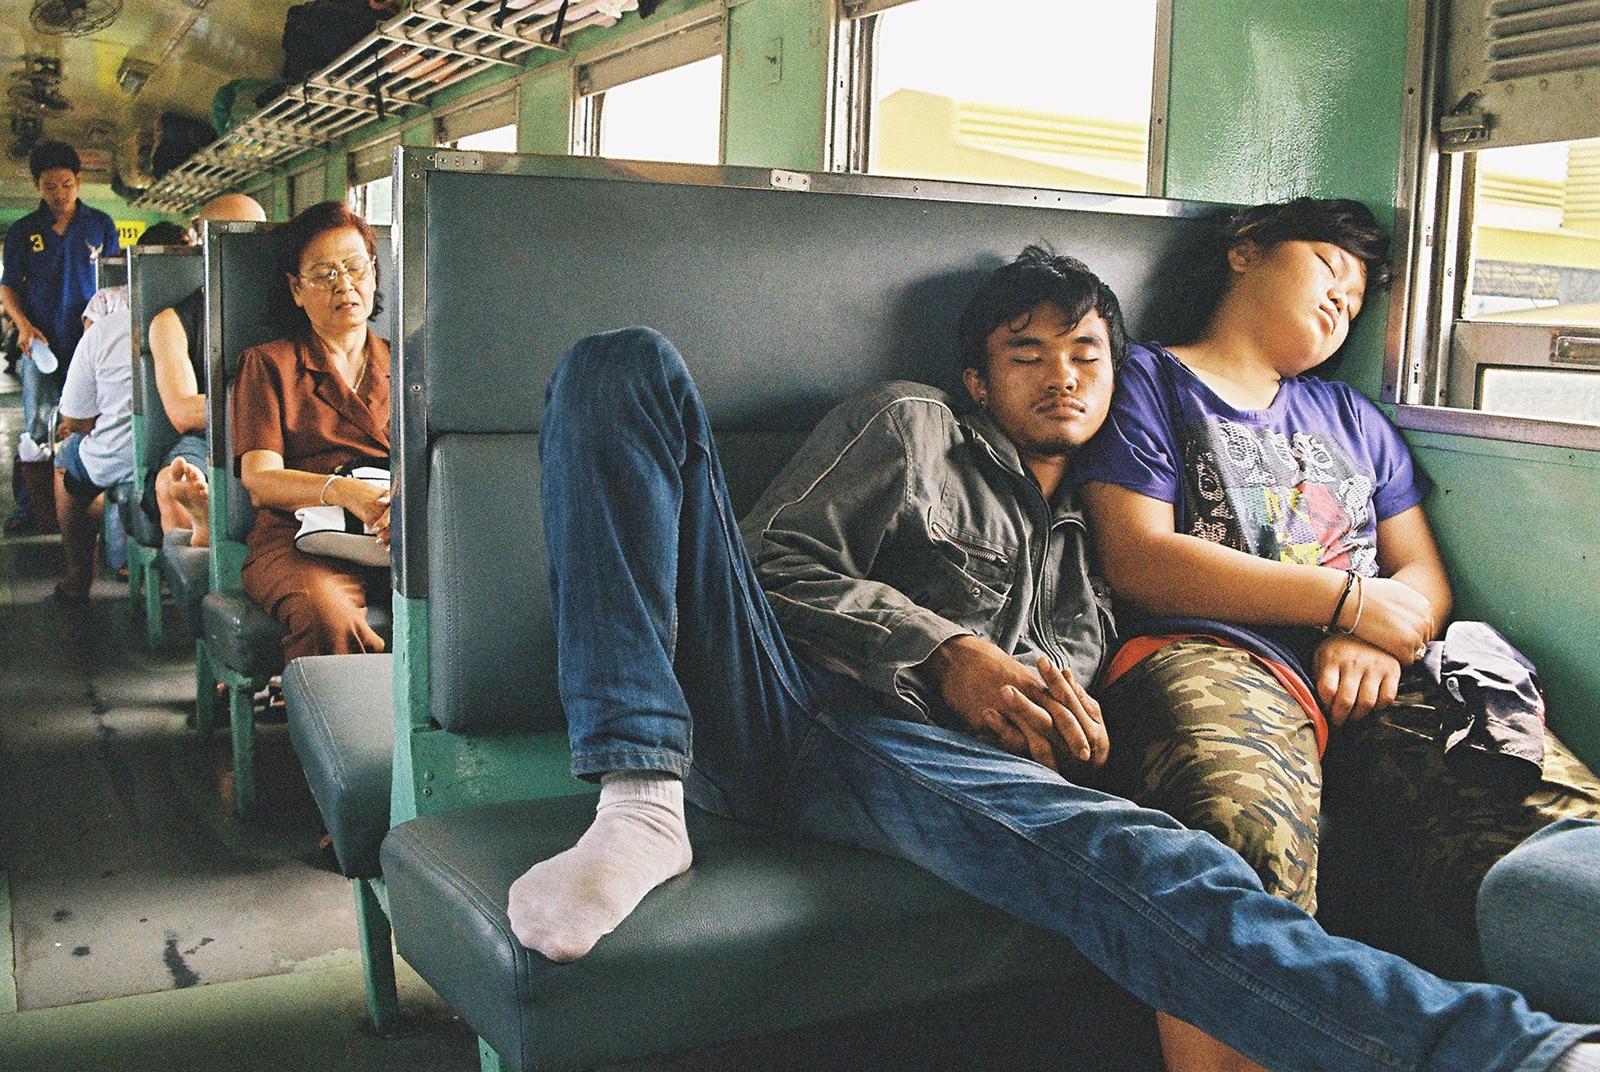 Railway Sleepers lead full